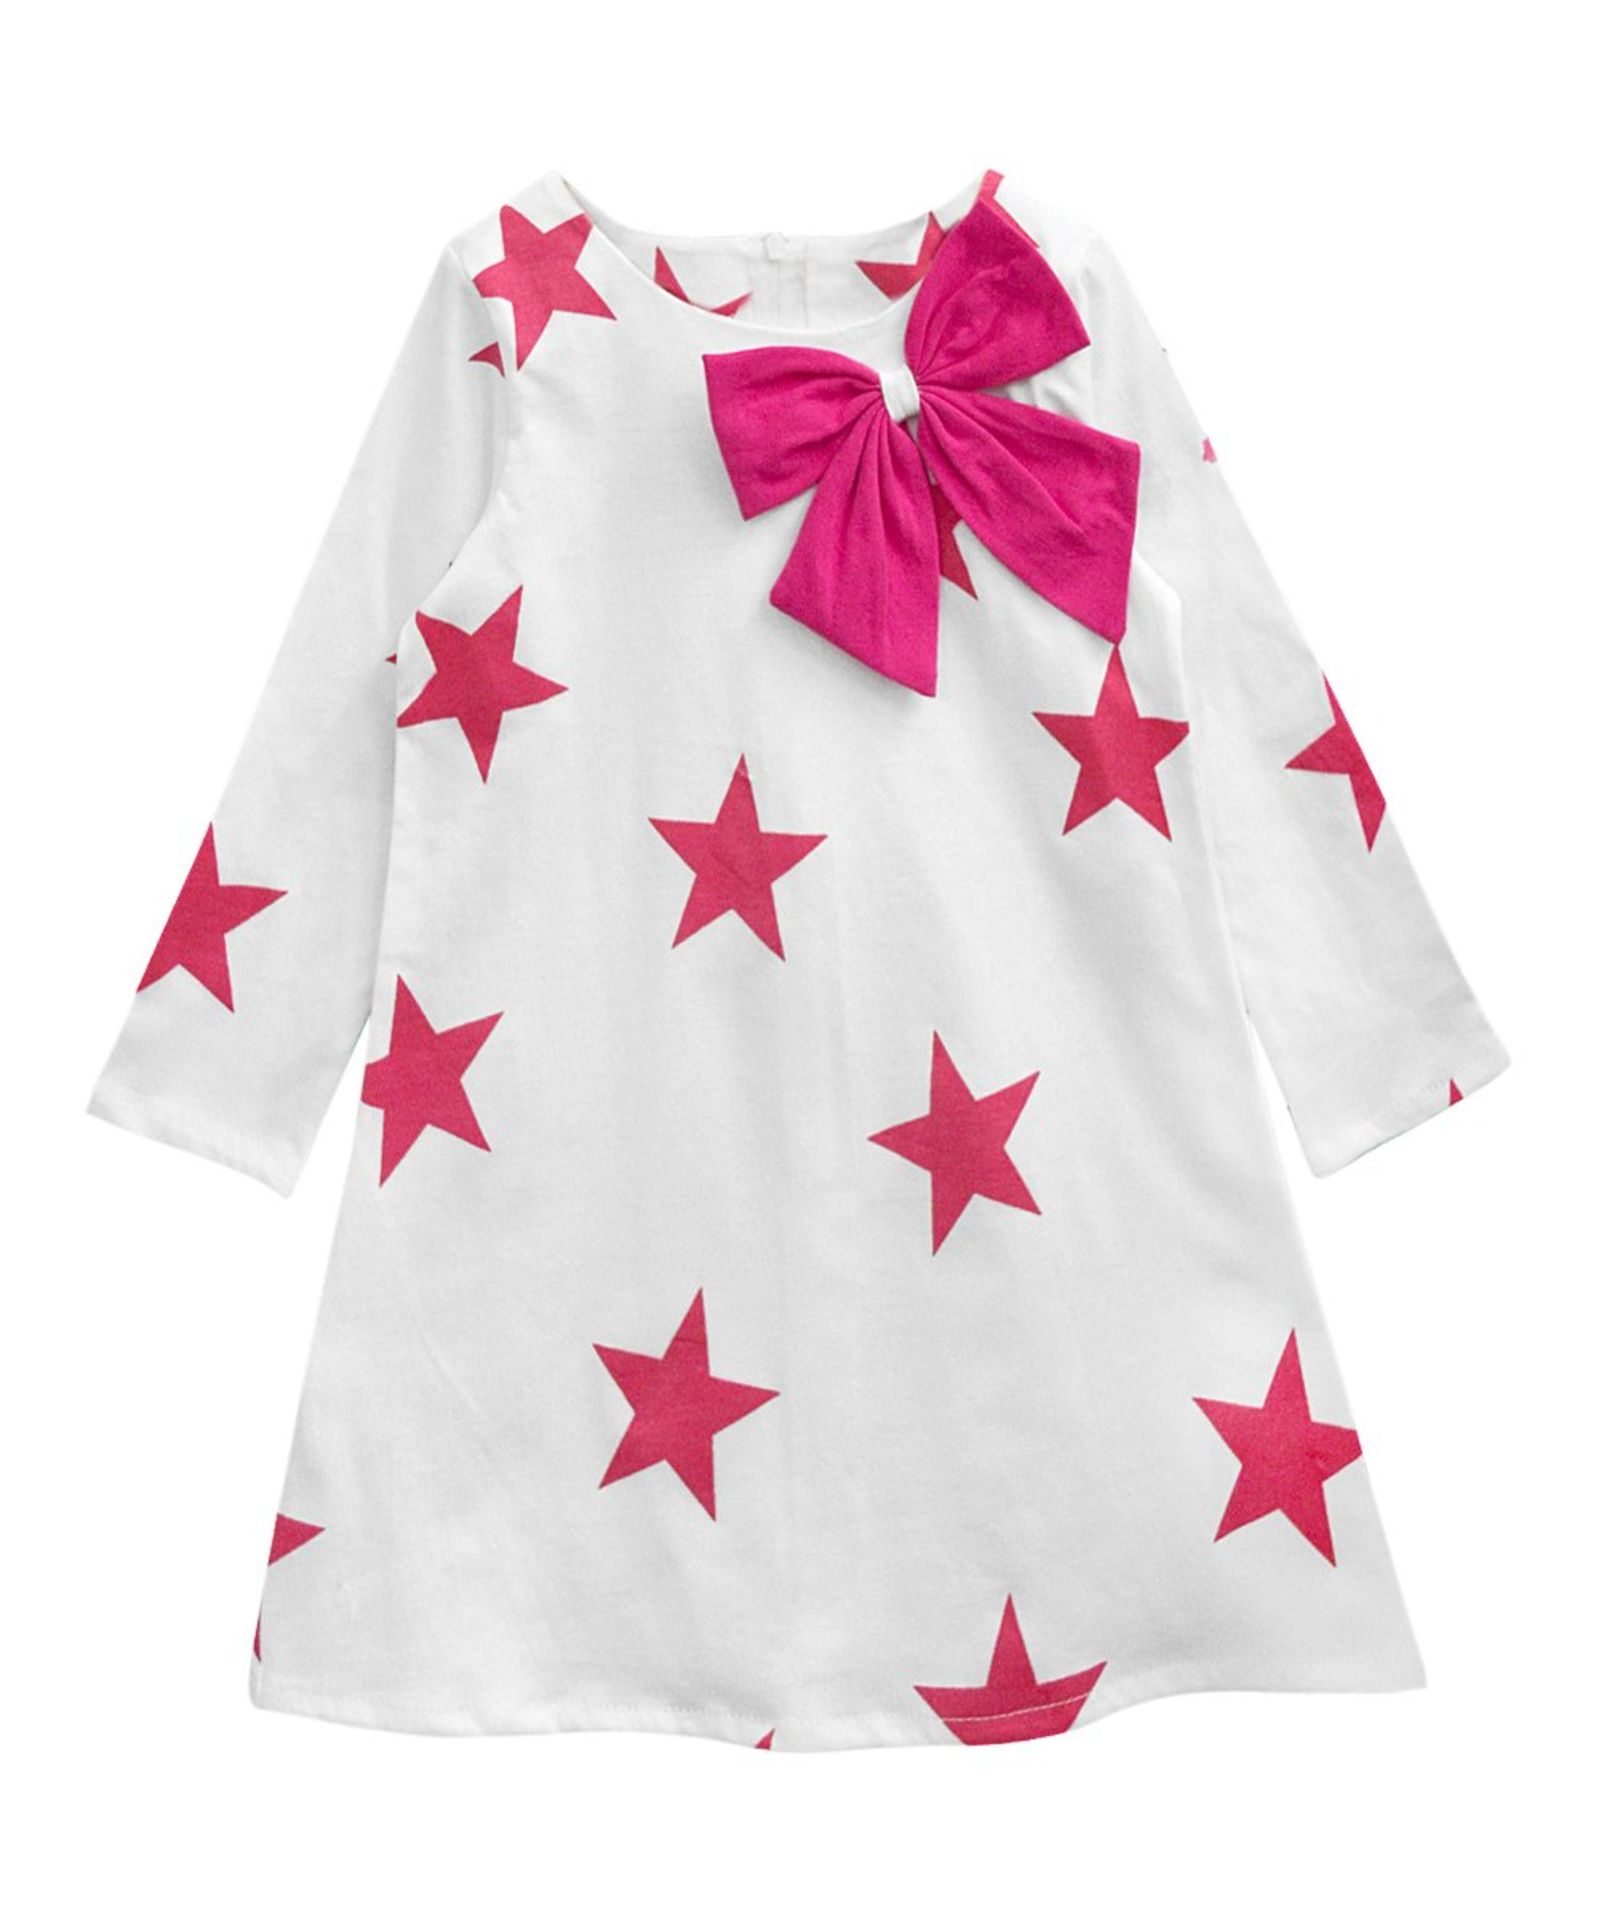 White& Pink Star Aurora Dress - Infant, Toddler & Girls